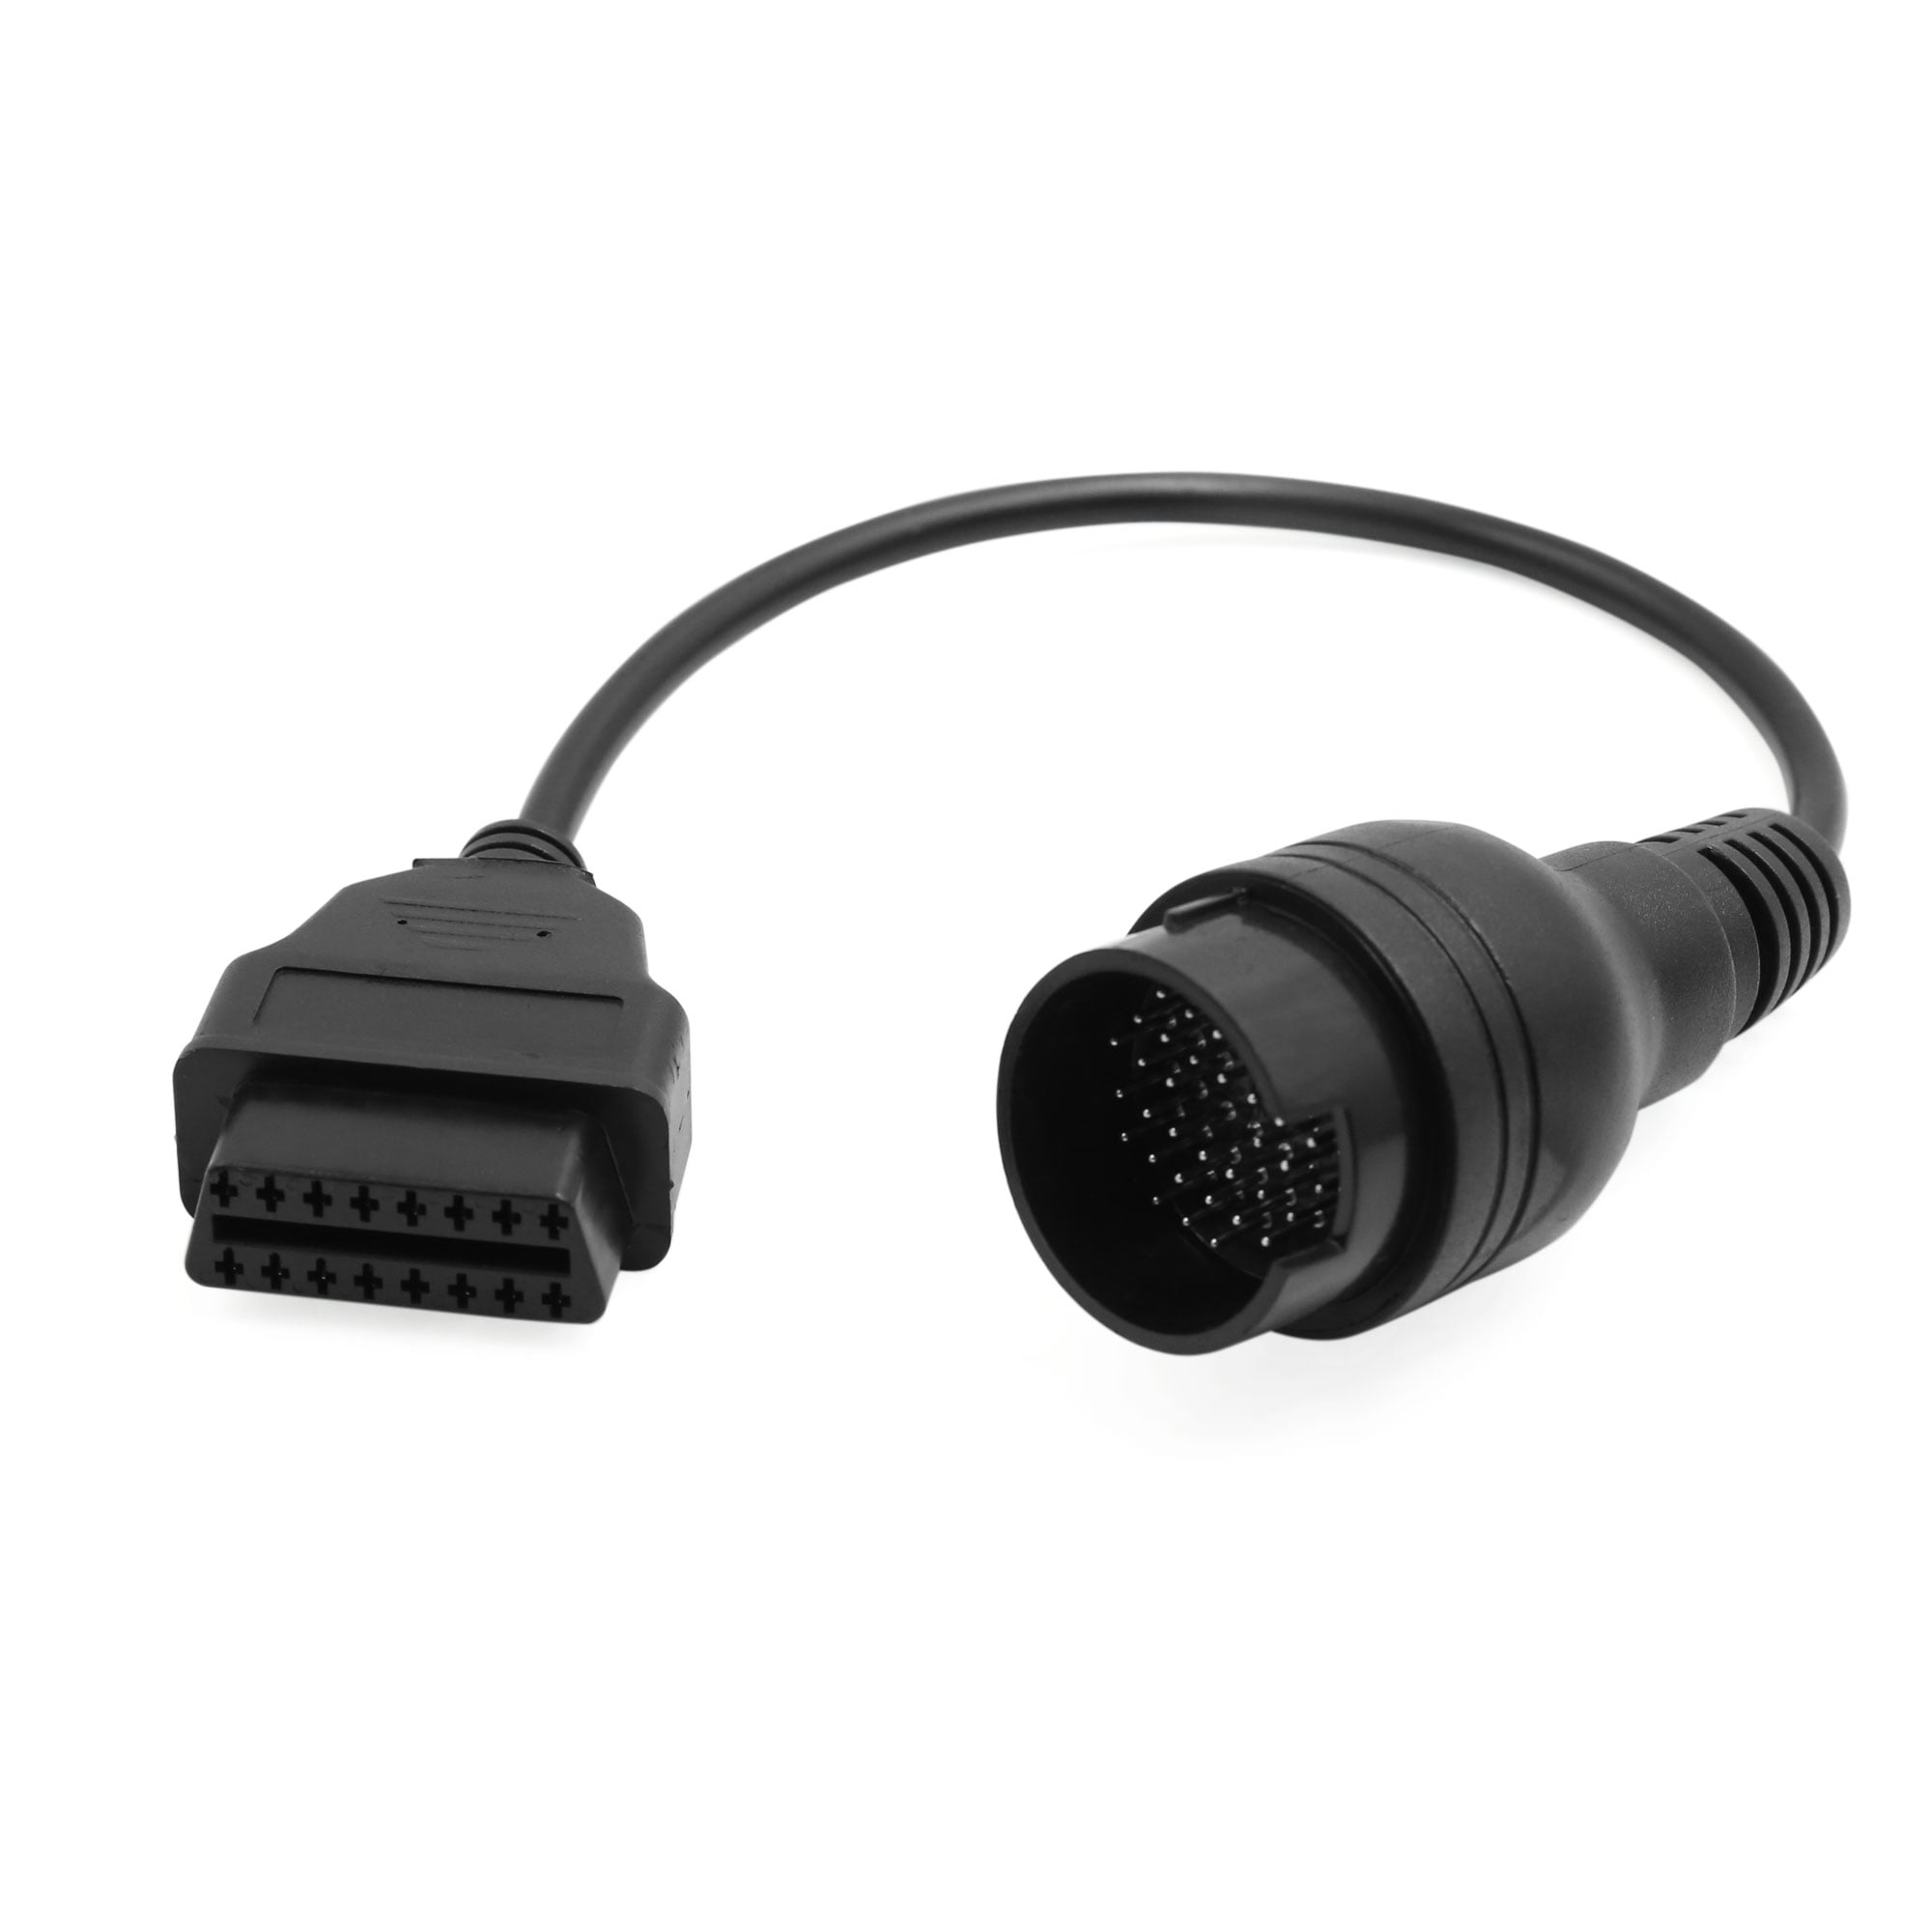 OBD2 16PIN Female Connector Plug Universal Auto Diagnostic Cable AdapterASS 